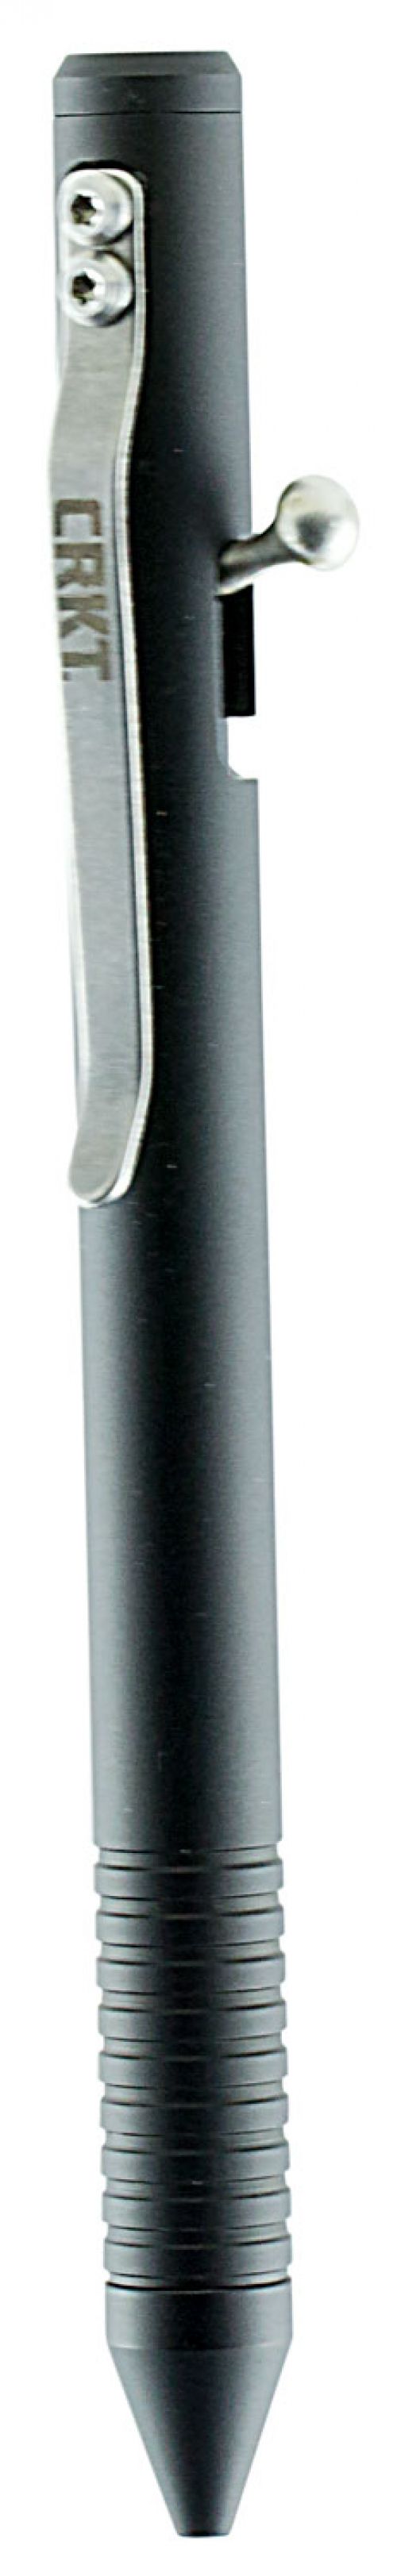 Columbia River R3401K Bolt-Action Pen Black